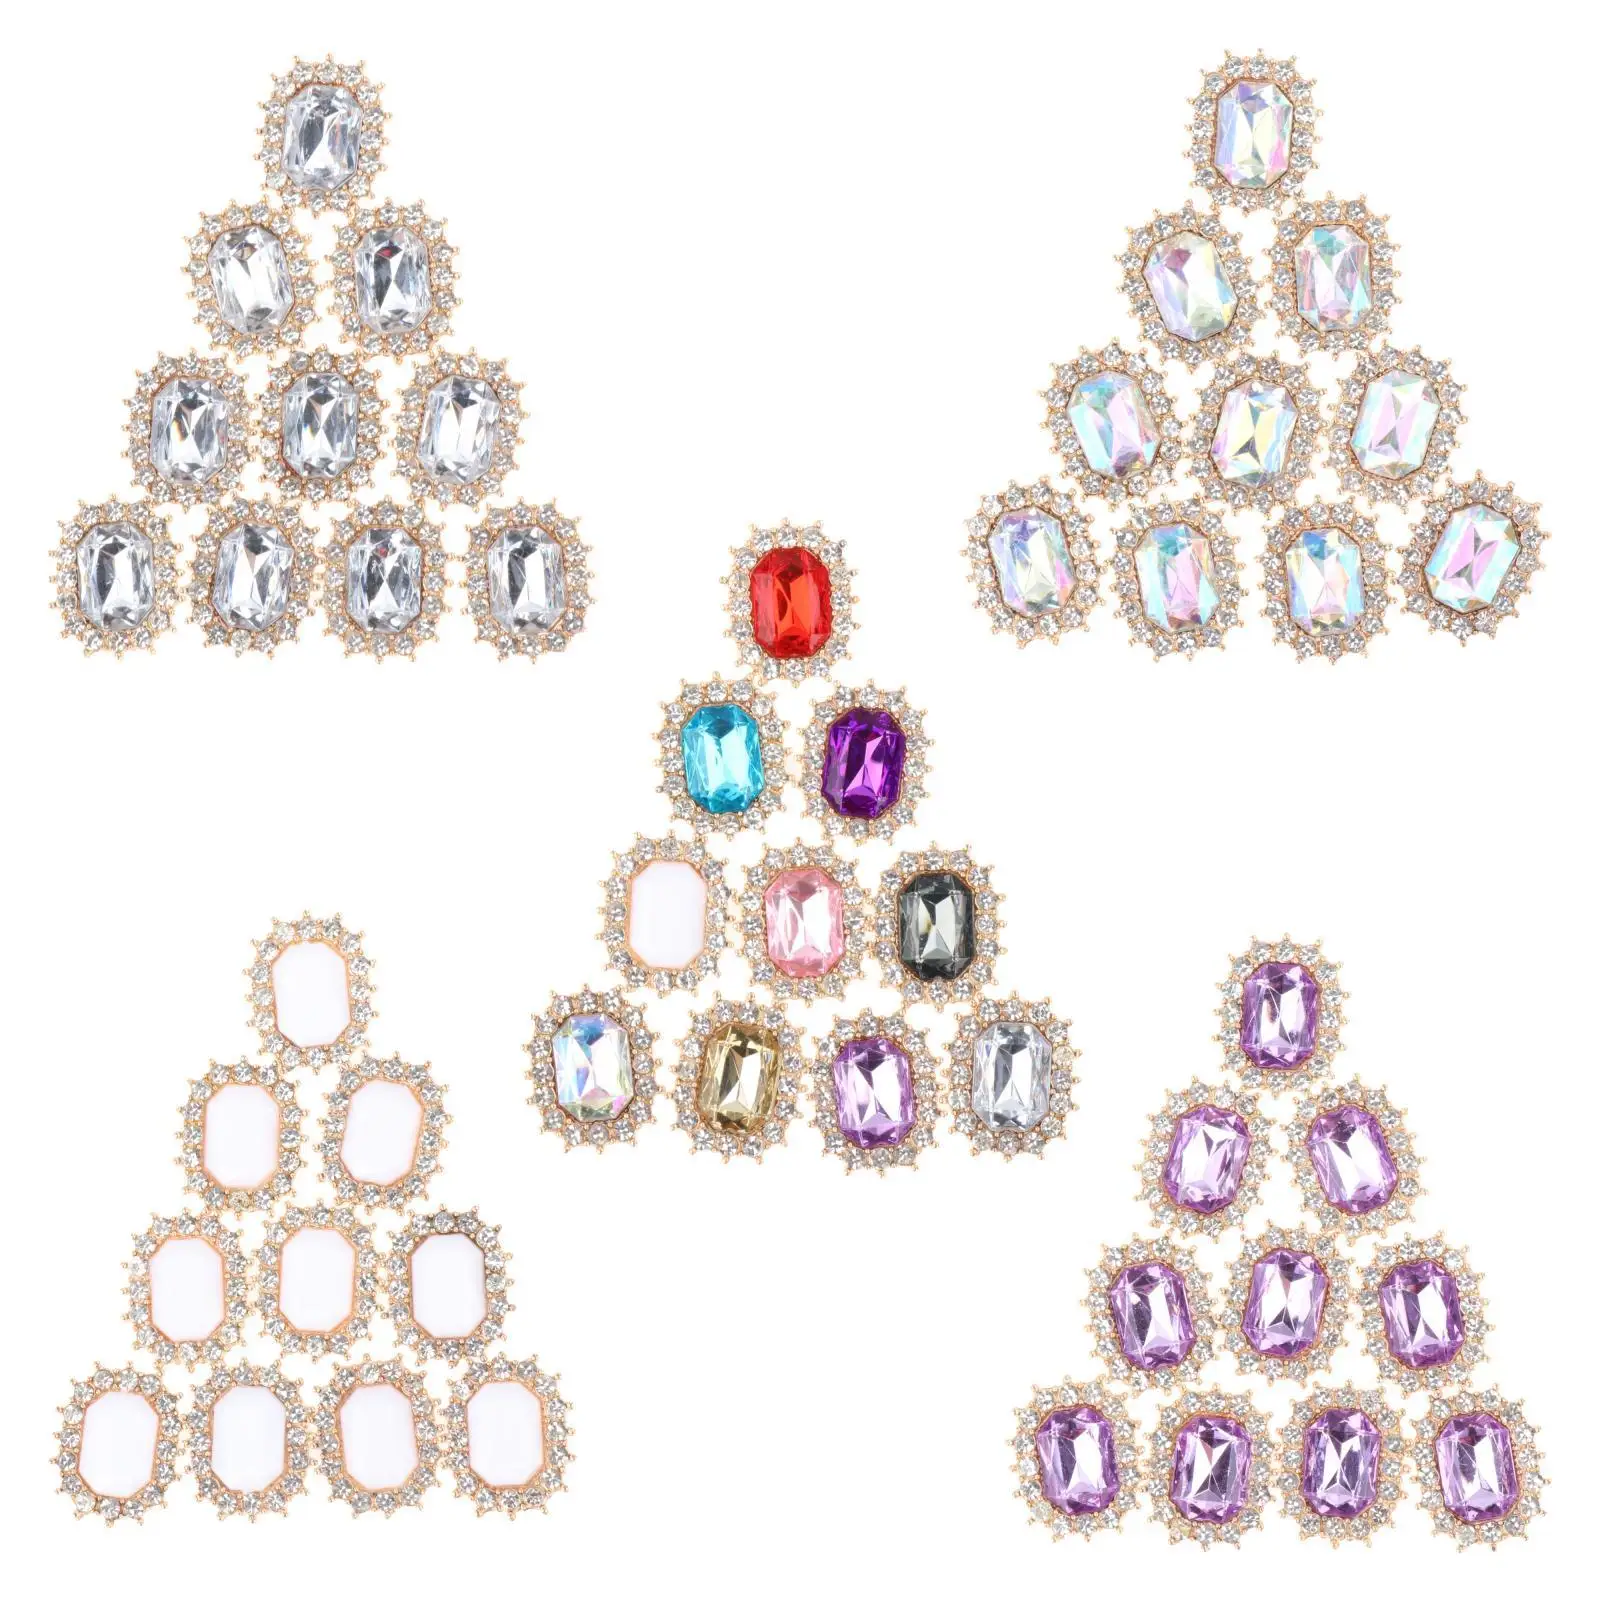 10Pcs Metal Rhinestone Buttons Crafts Decorative Women Girls for Jewelry Making Brooch